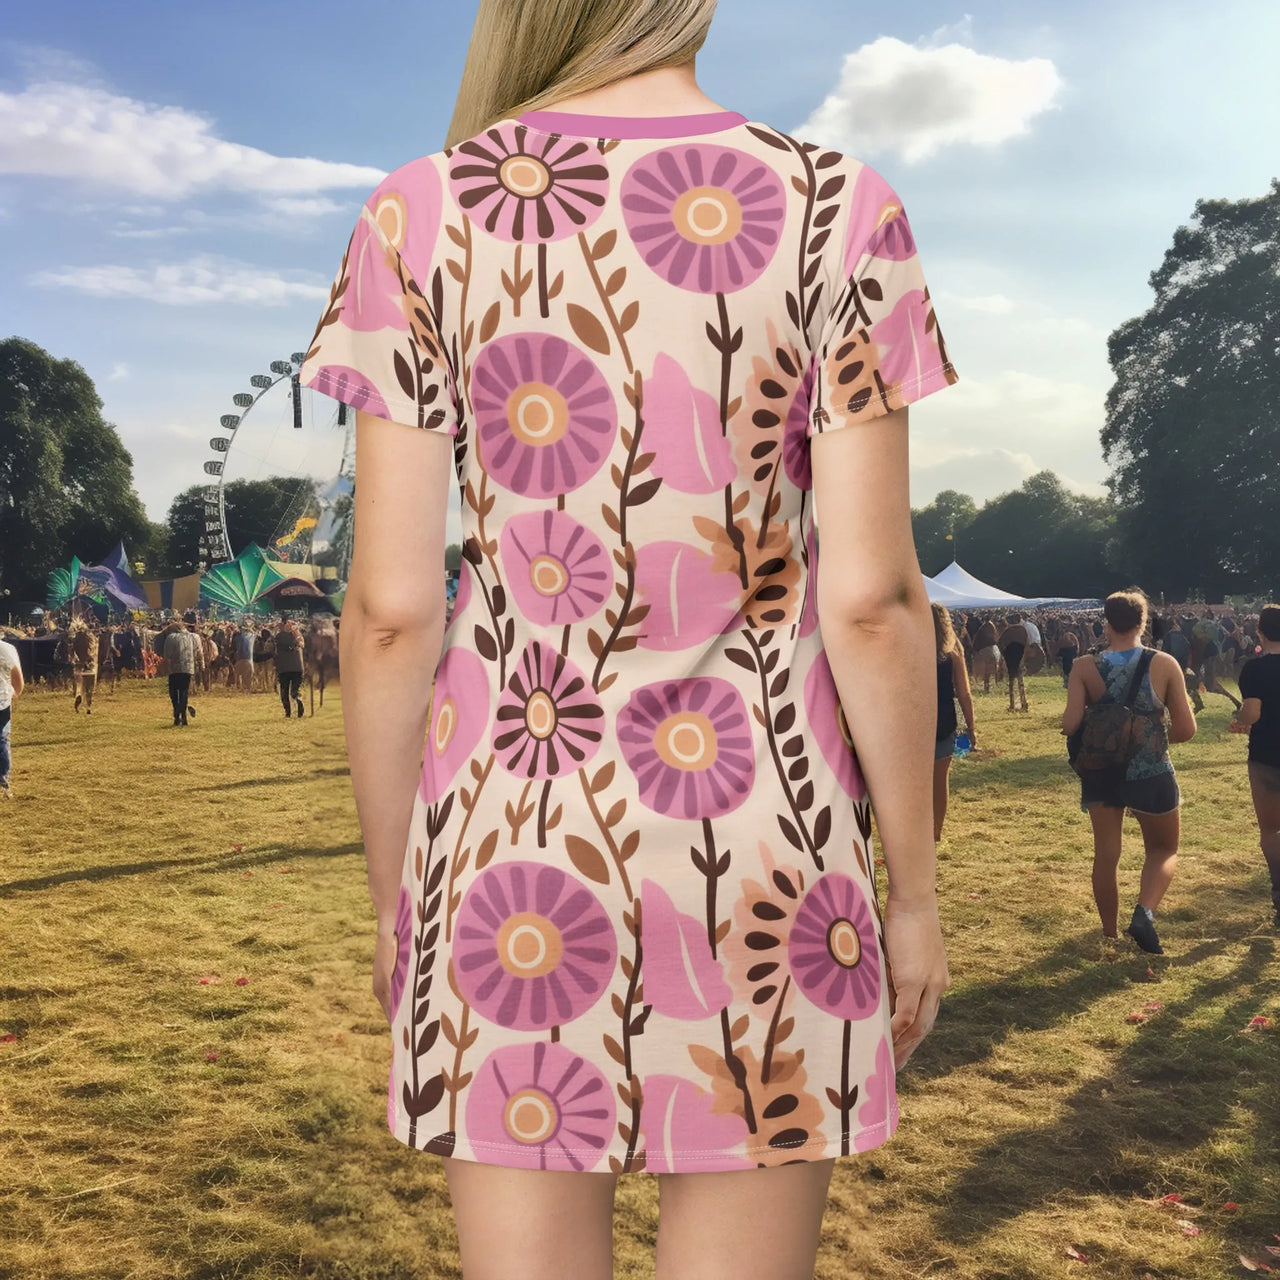 Casual Summer Days, Retro-Themed Gatherings, Artistic Photo Shoots T-Shirt Dress: 70s-Inspired Pinwheel Daisy Vines